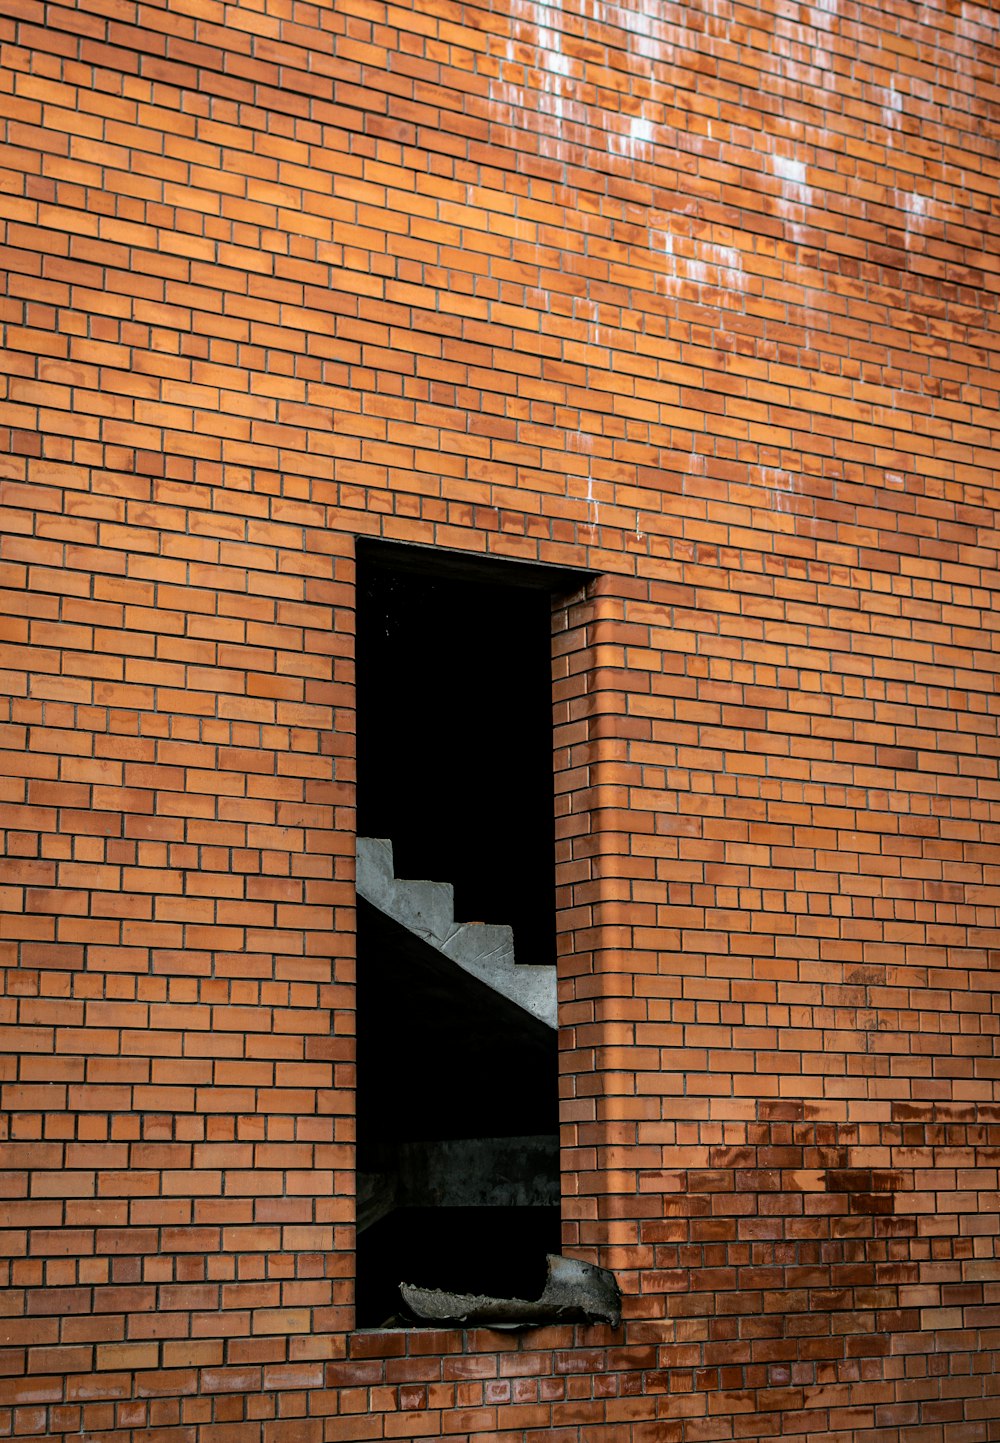 brown brick wall with black window